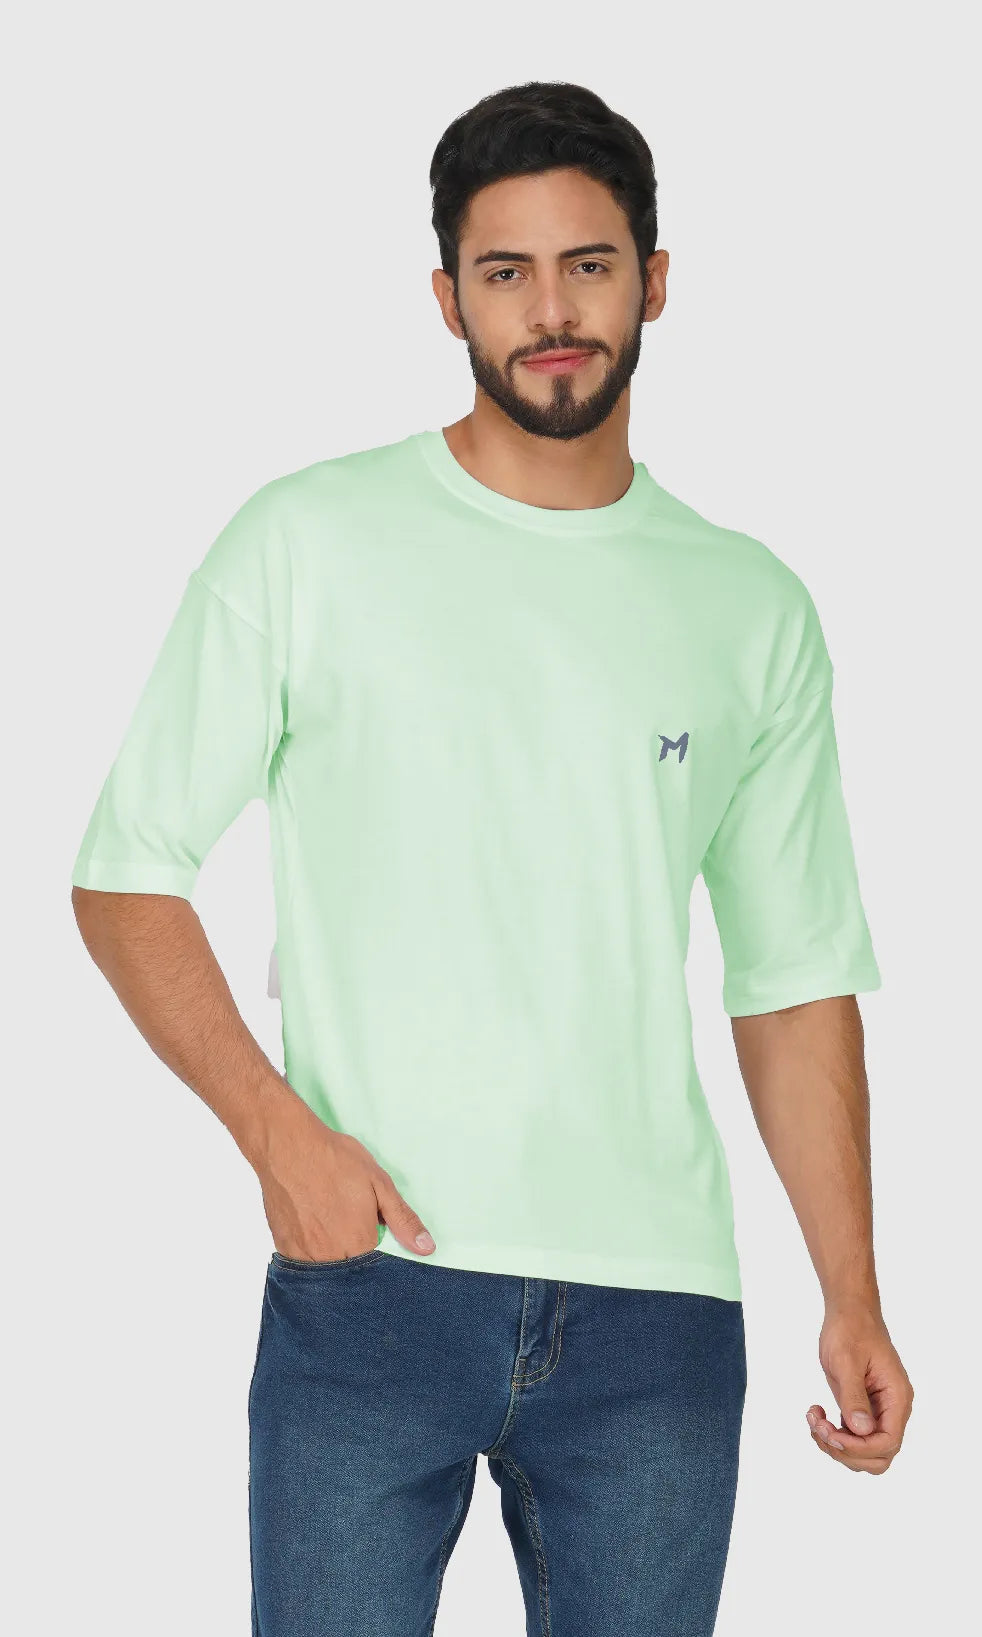 Mebadass Cotton Men's OverSized/Baggy Dropshoulder T-shirts - Pista Green